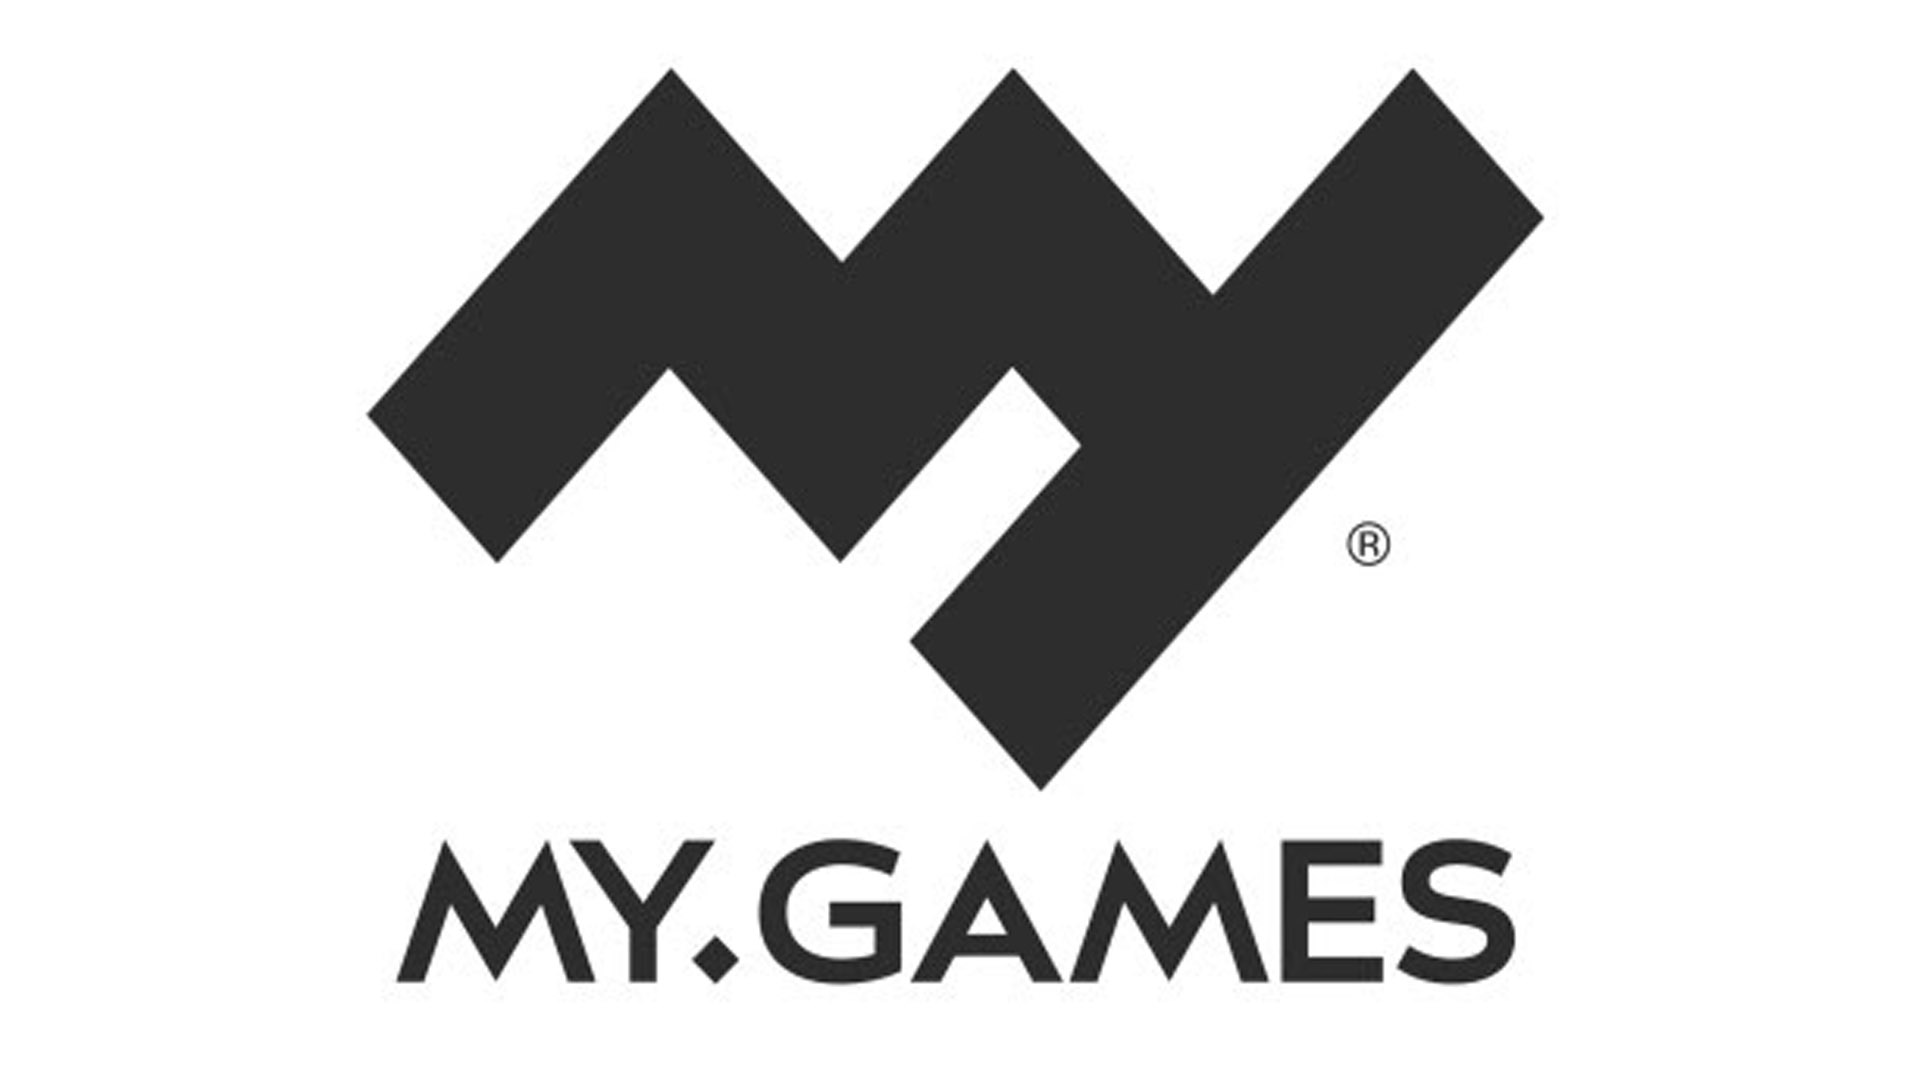 St games ru. My games игры. Mygames logo. Бренд game. Store логотип.